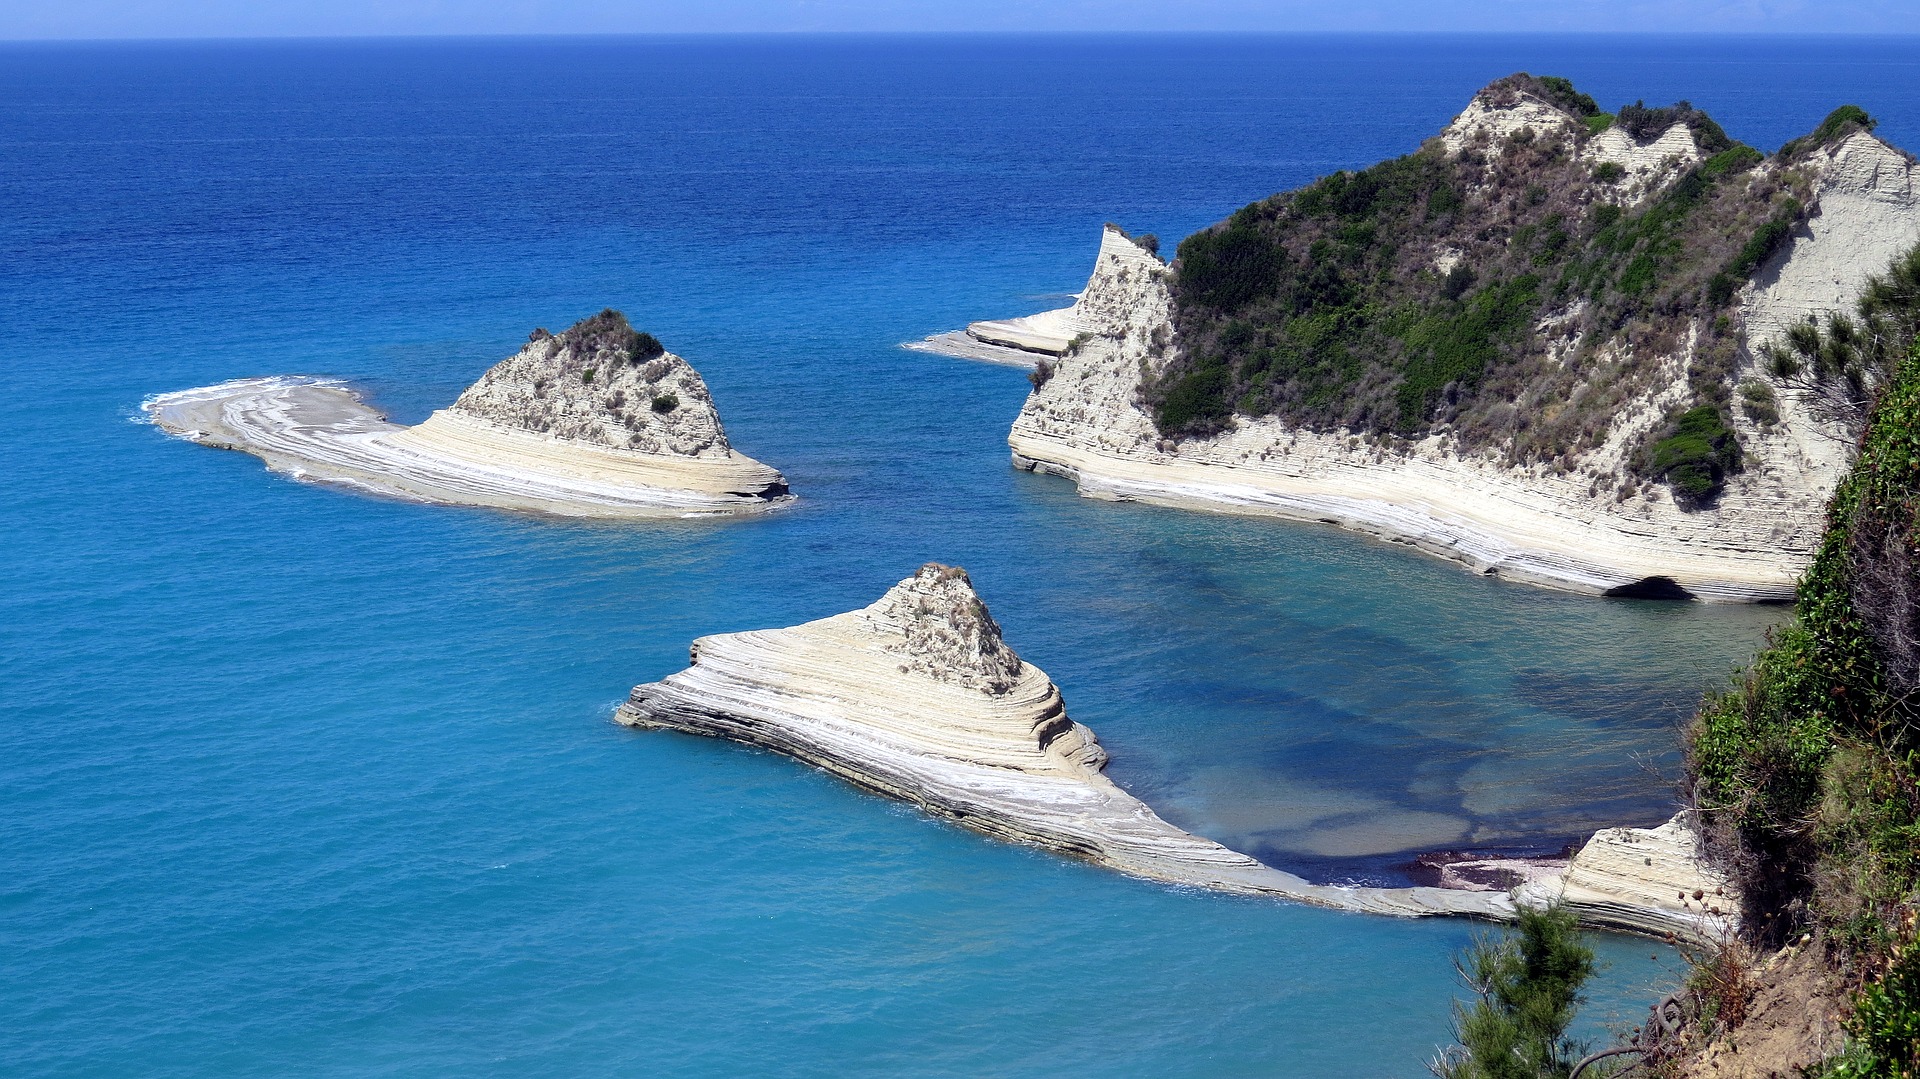 Corfu cove - image by superfactice @ pixabay.com